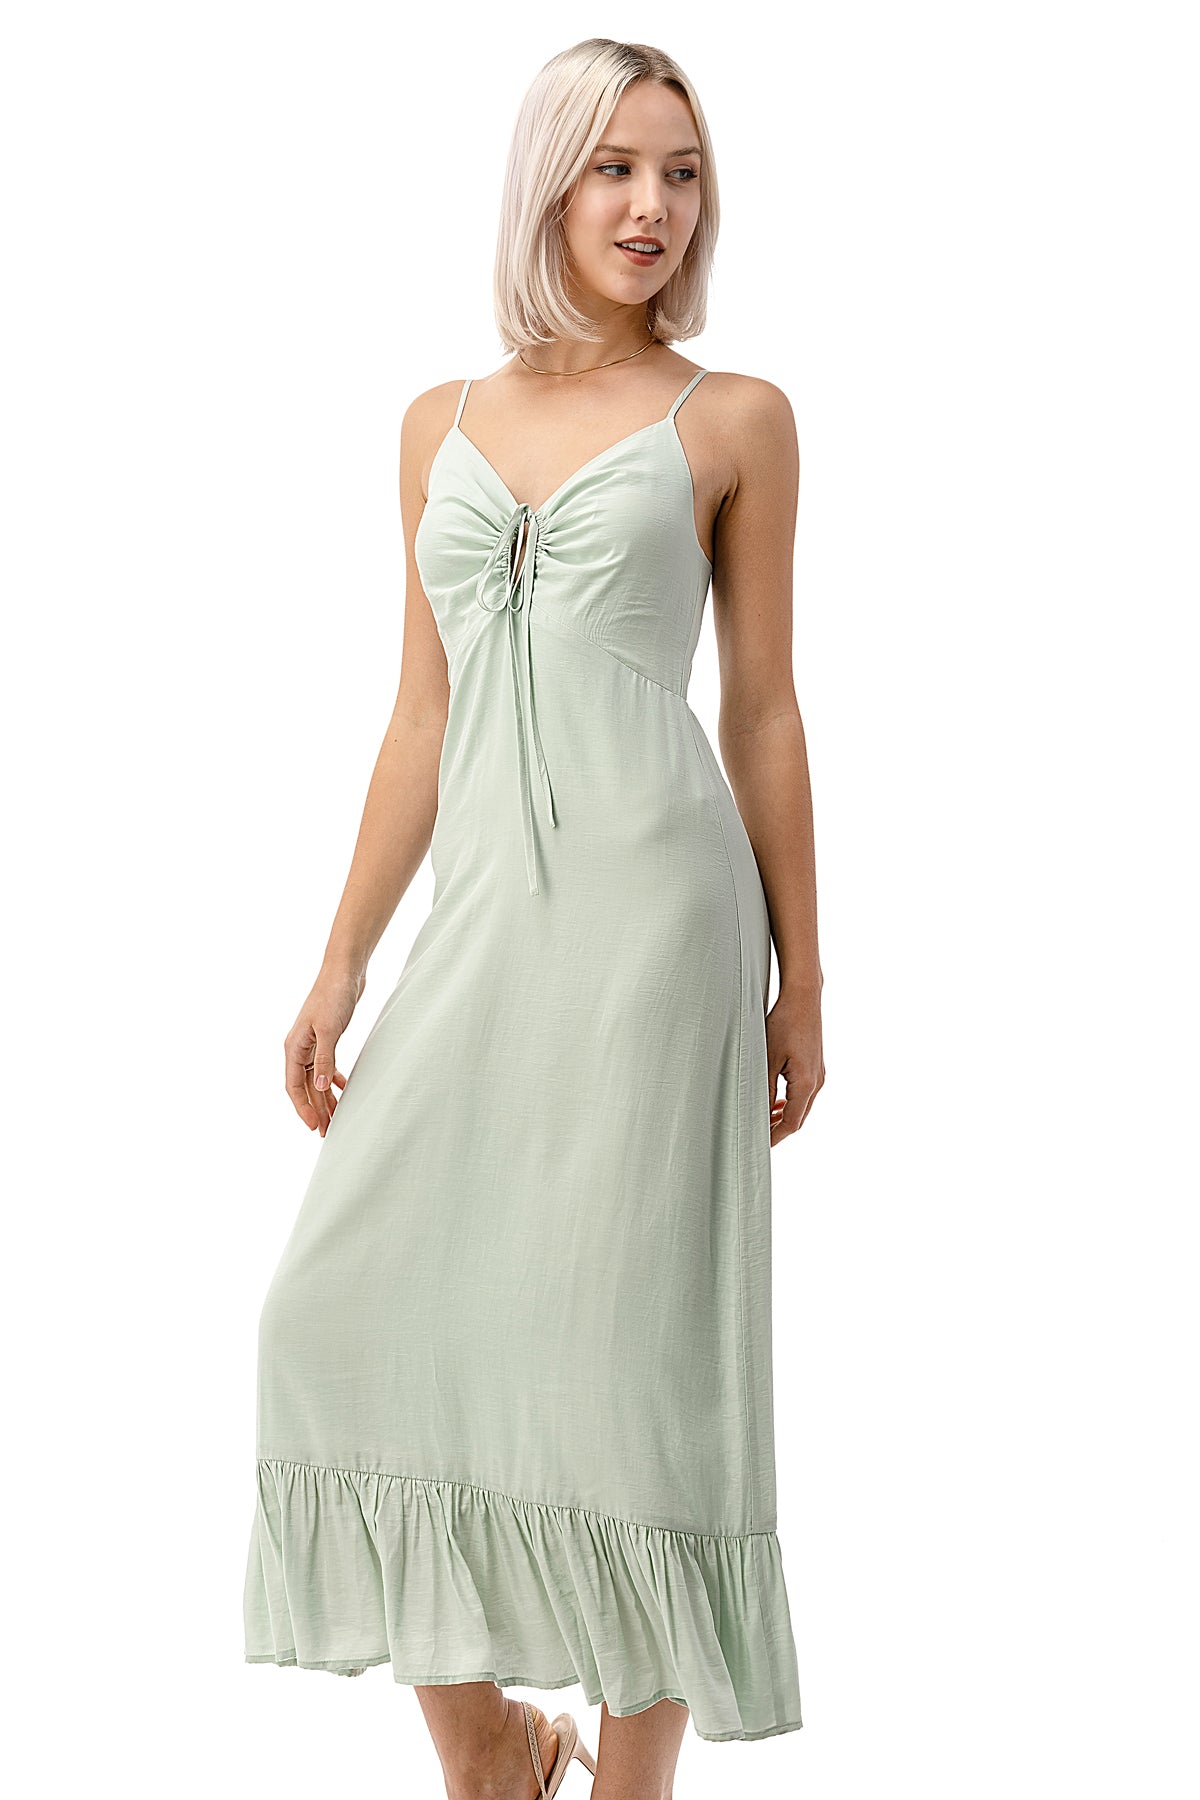 EDGY Land Girl's and Women's Drawstring Bra Flowey Ruffled Bottom A-Line Open Back Tea-Length Cami Party Dress